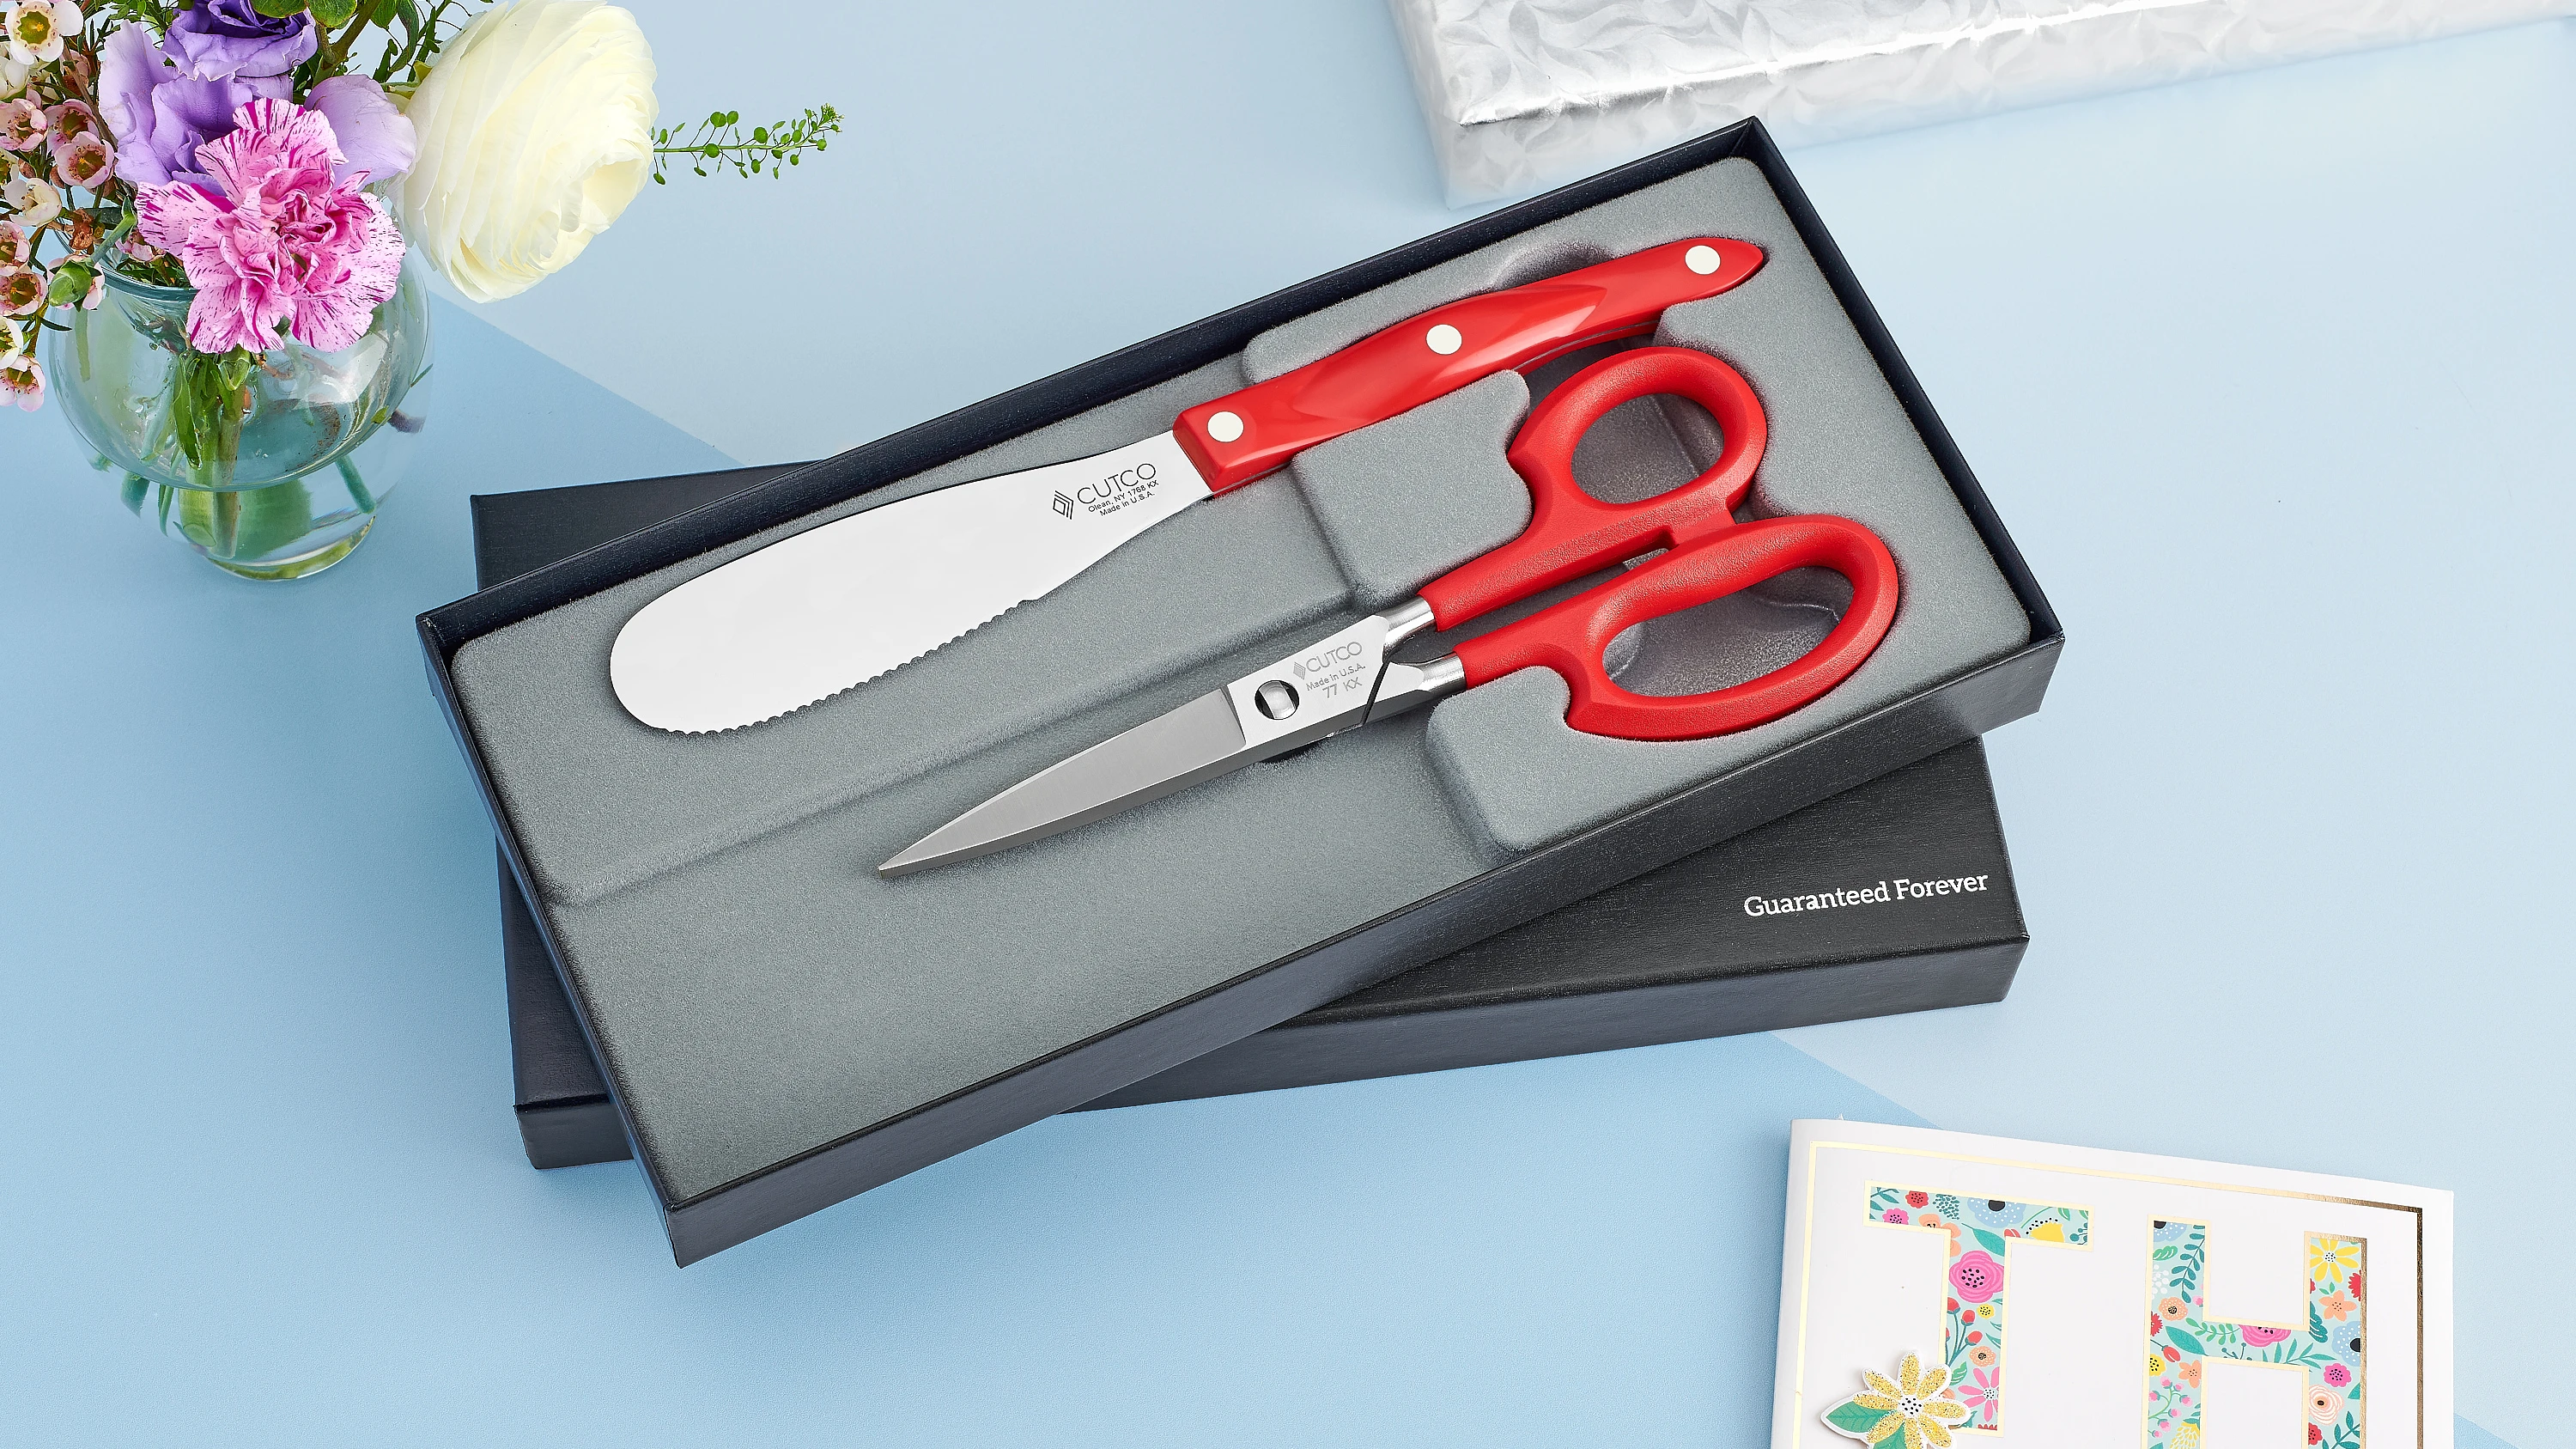 Cutco knives, scissors, knife blocks - household items - by owner